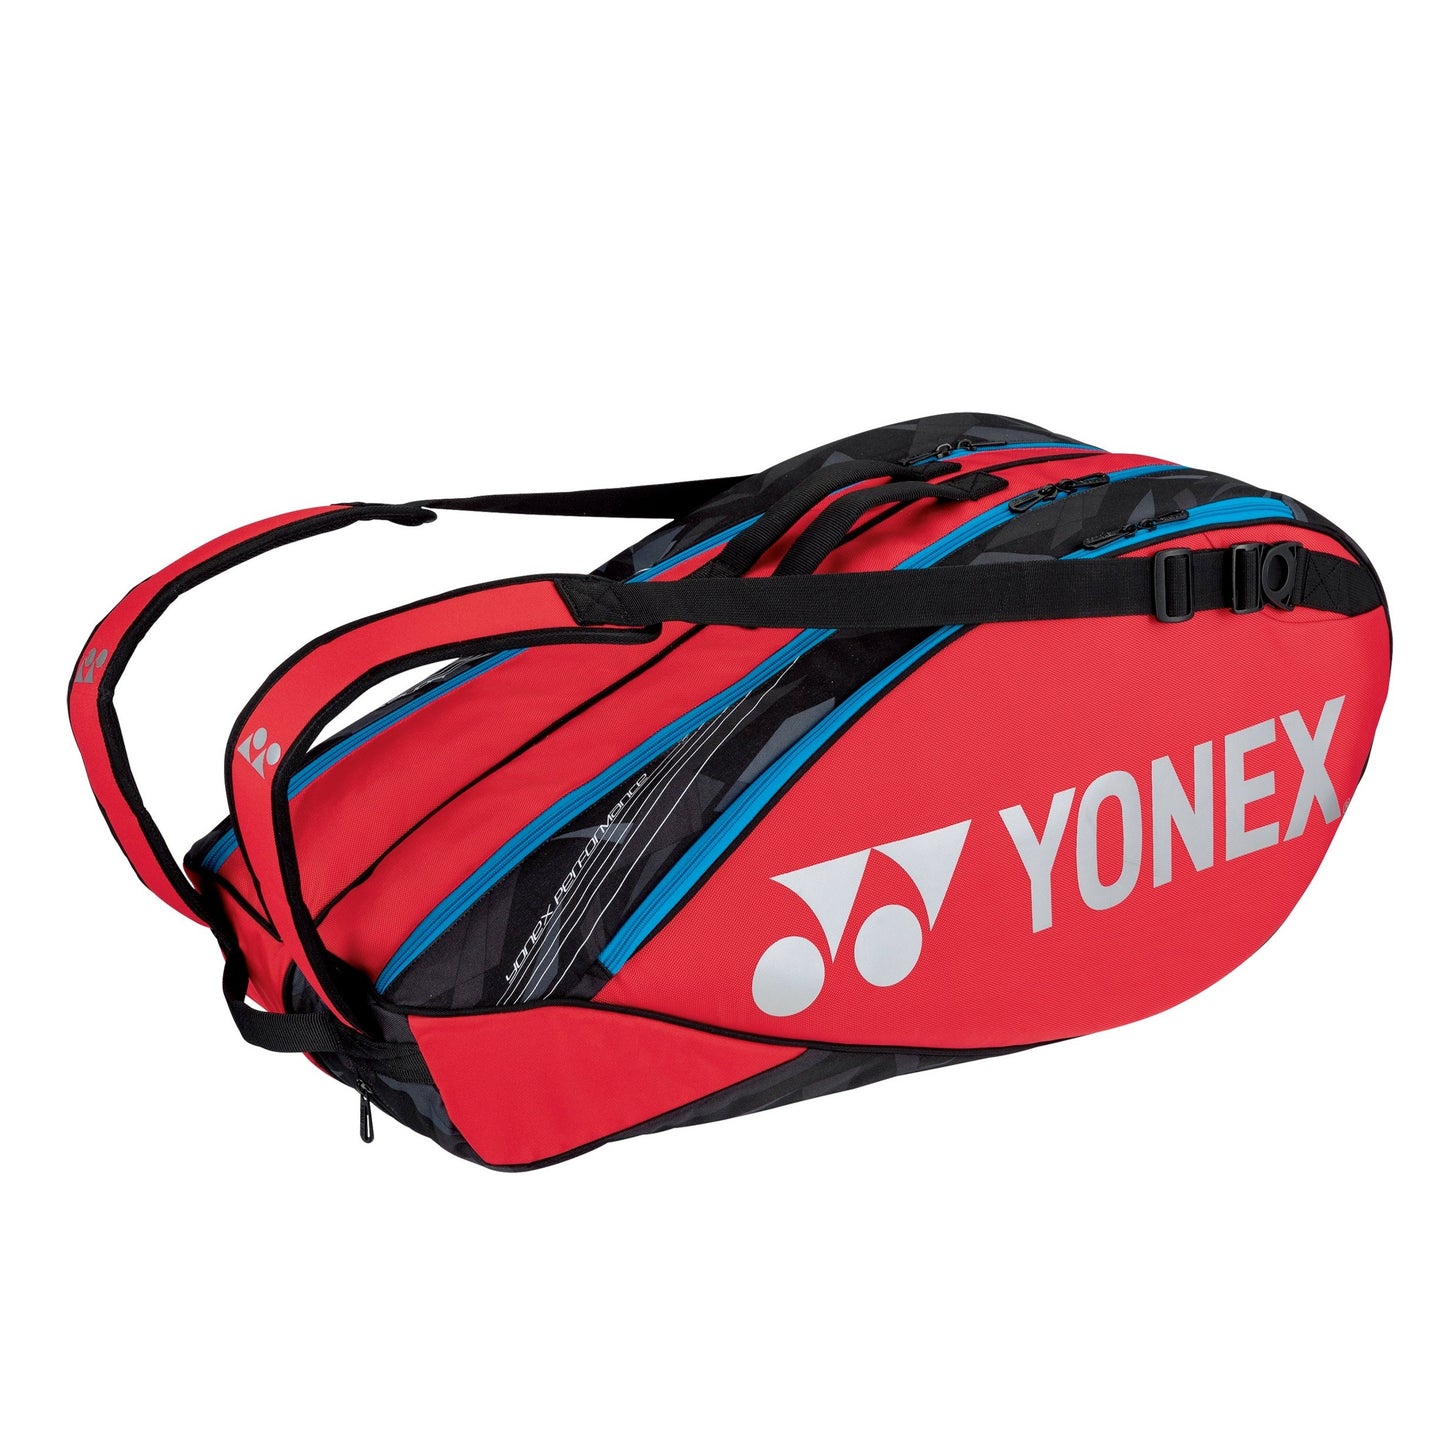 Yonex Pro 6 Pack Tennis Bag Scarlet